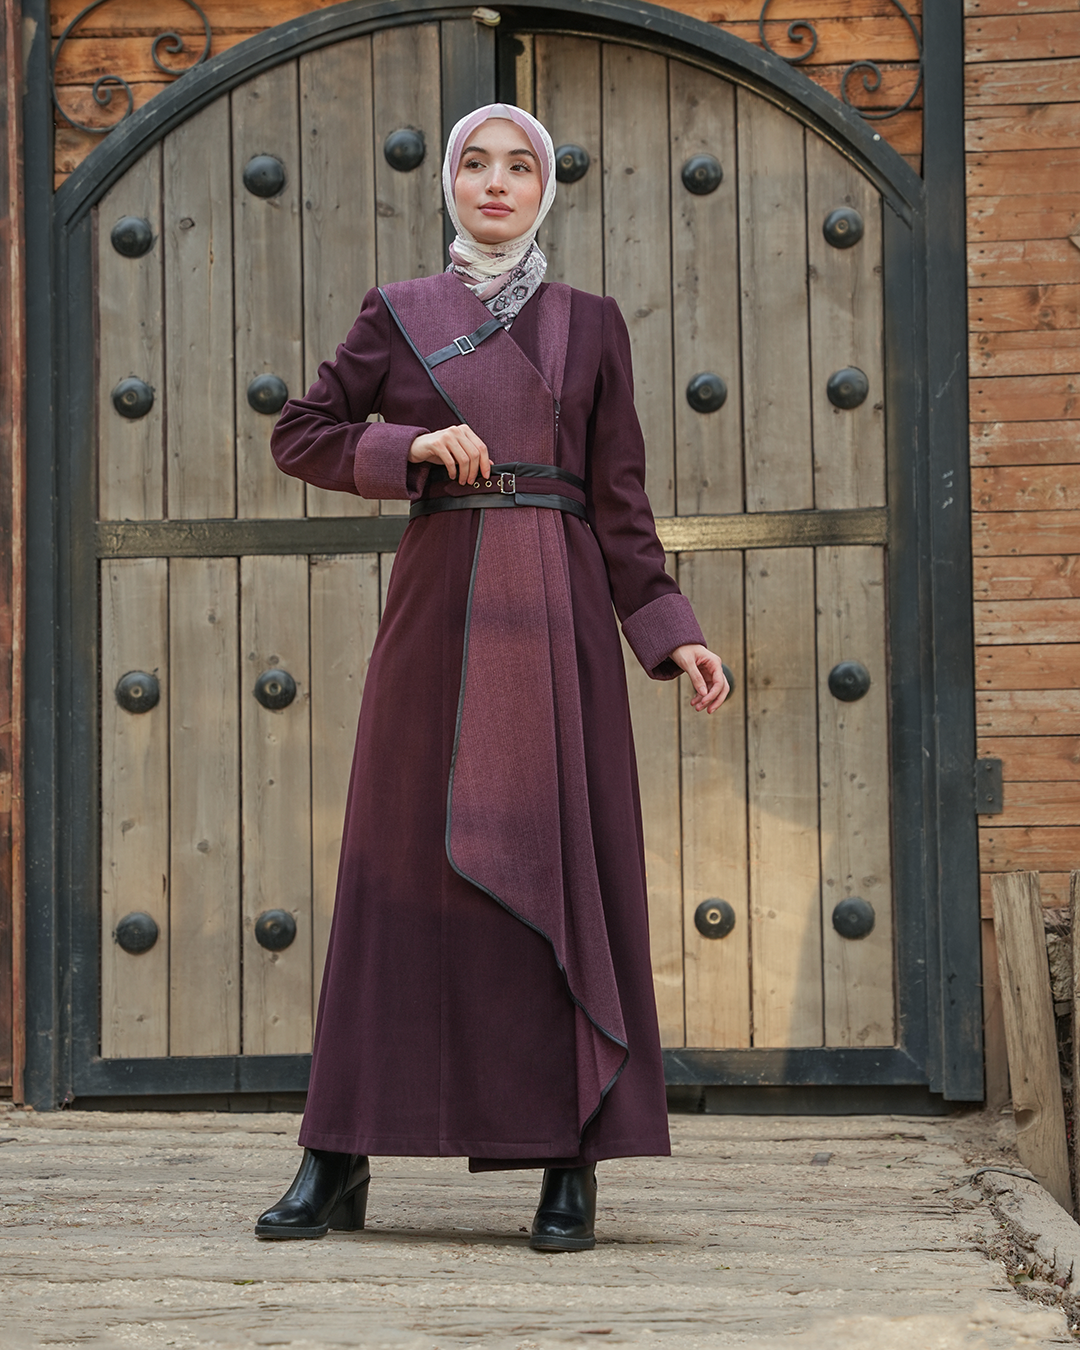 Stay Fashion-Forward with Our Latest Jilbab Styles